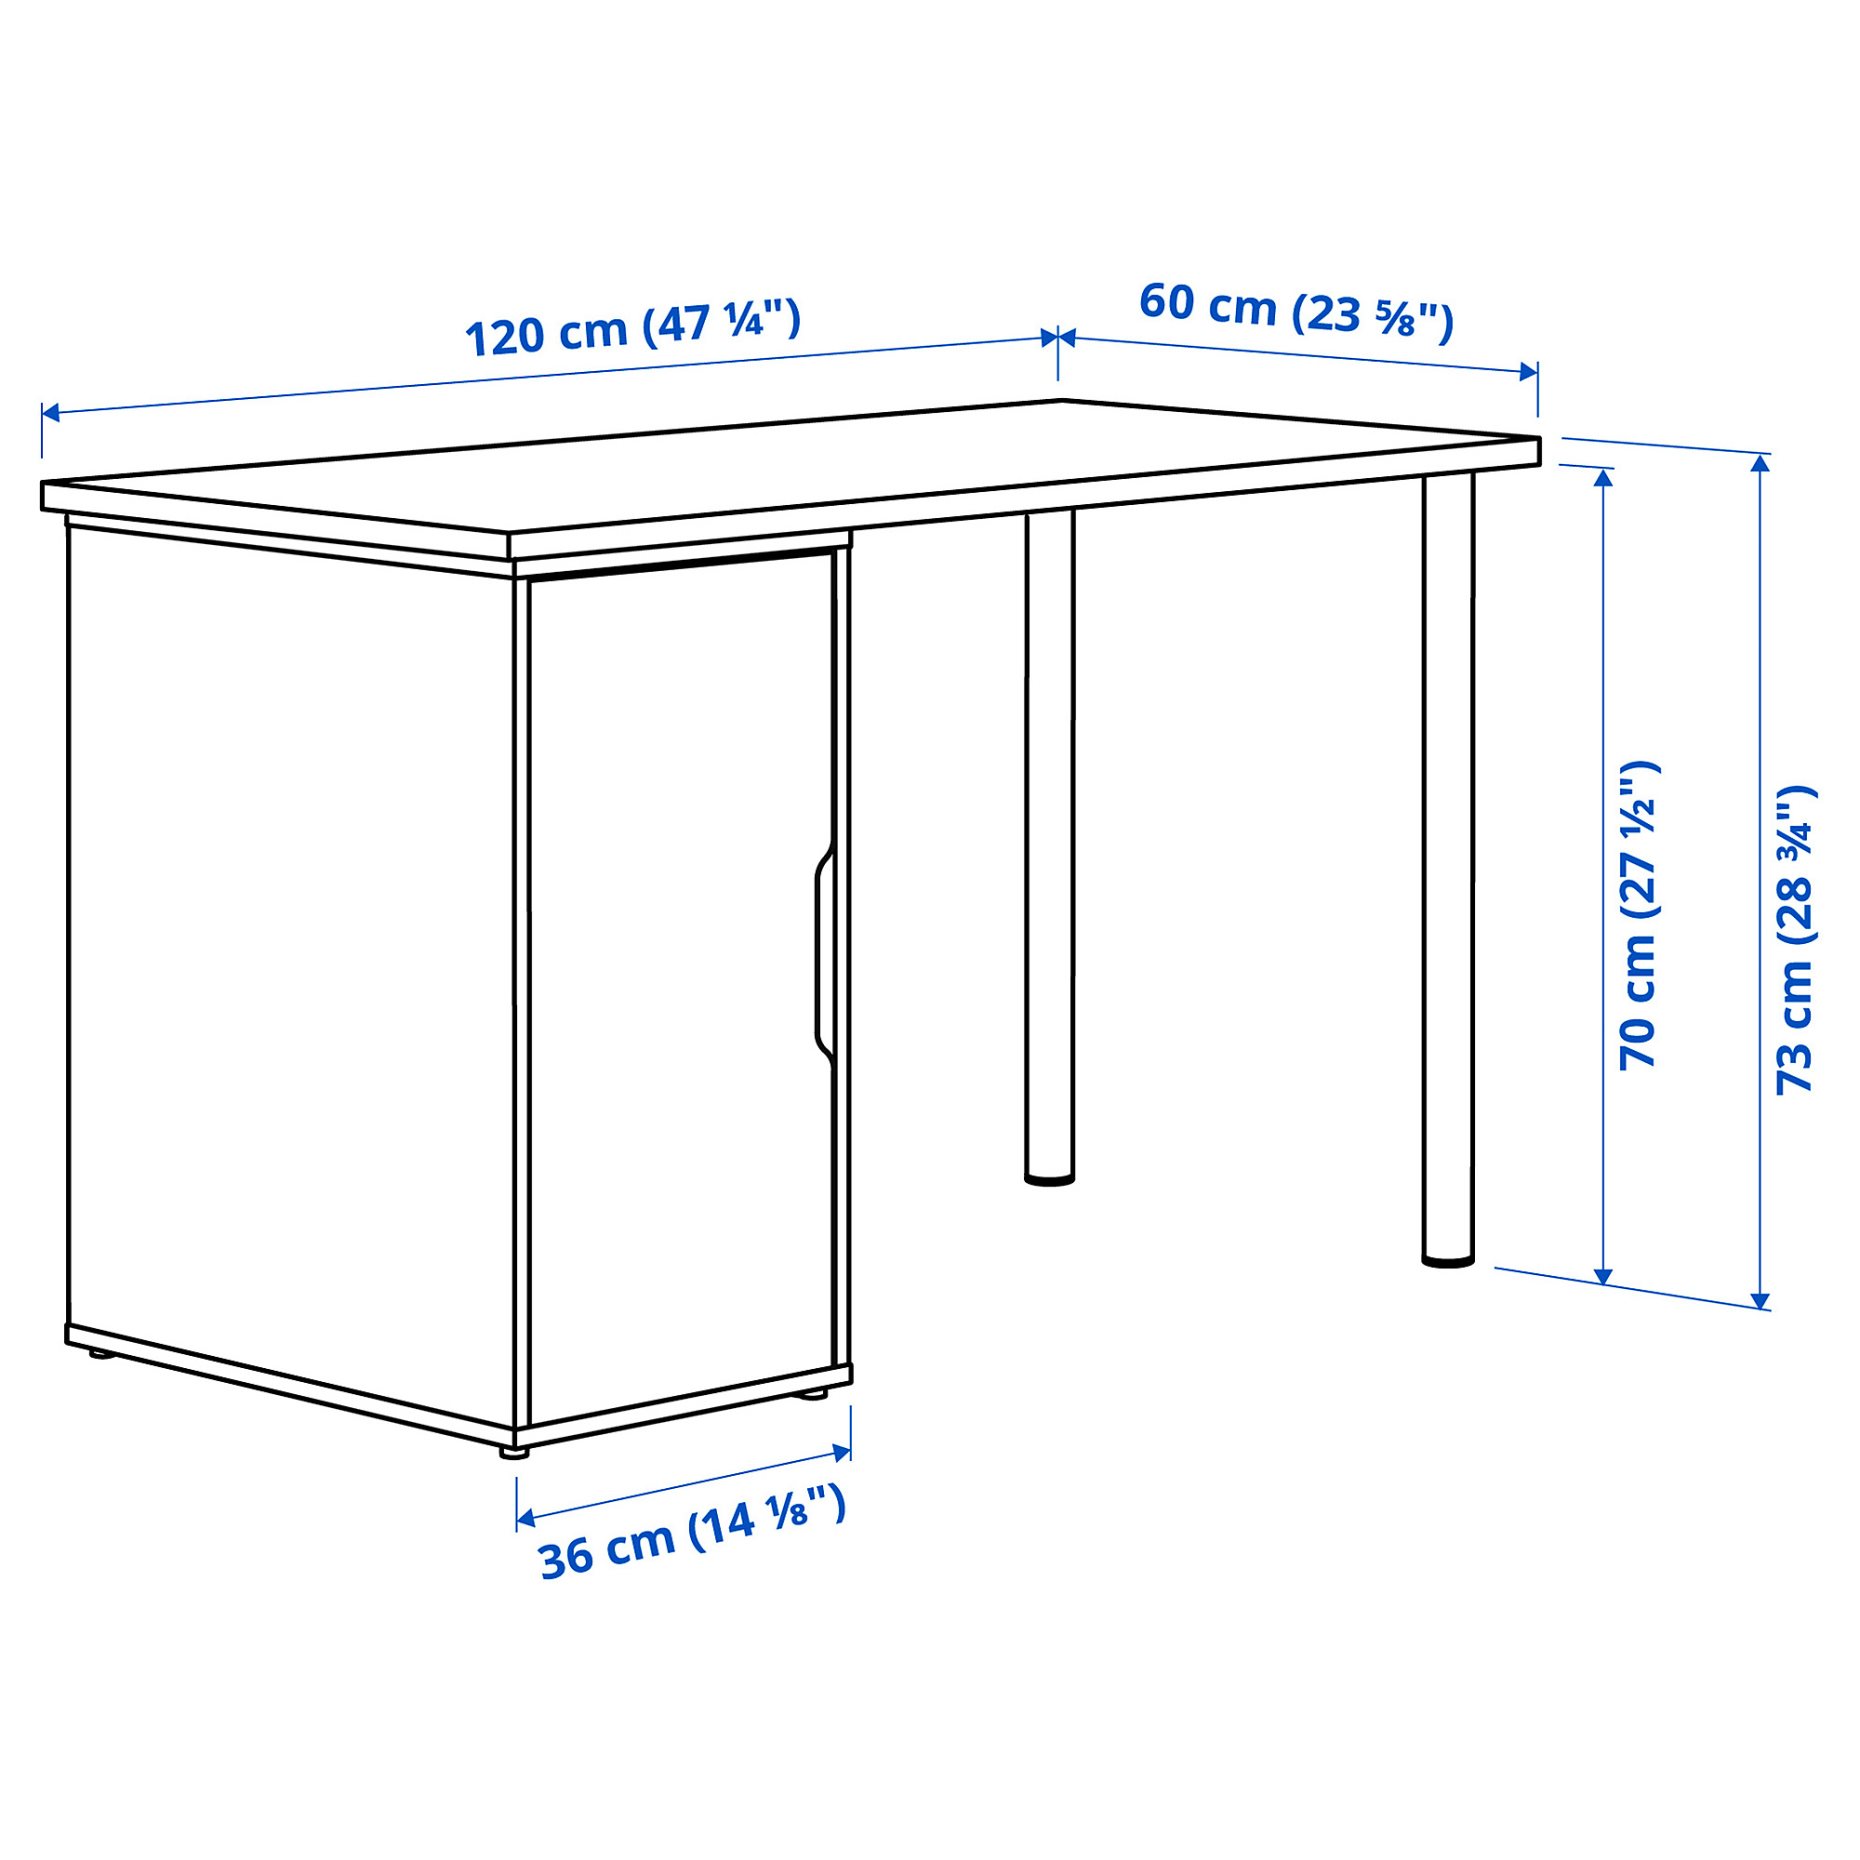 LAGKAPTEN/ALEX, desk, 120x60 cm, 295.233.72